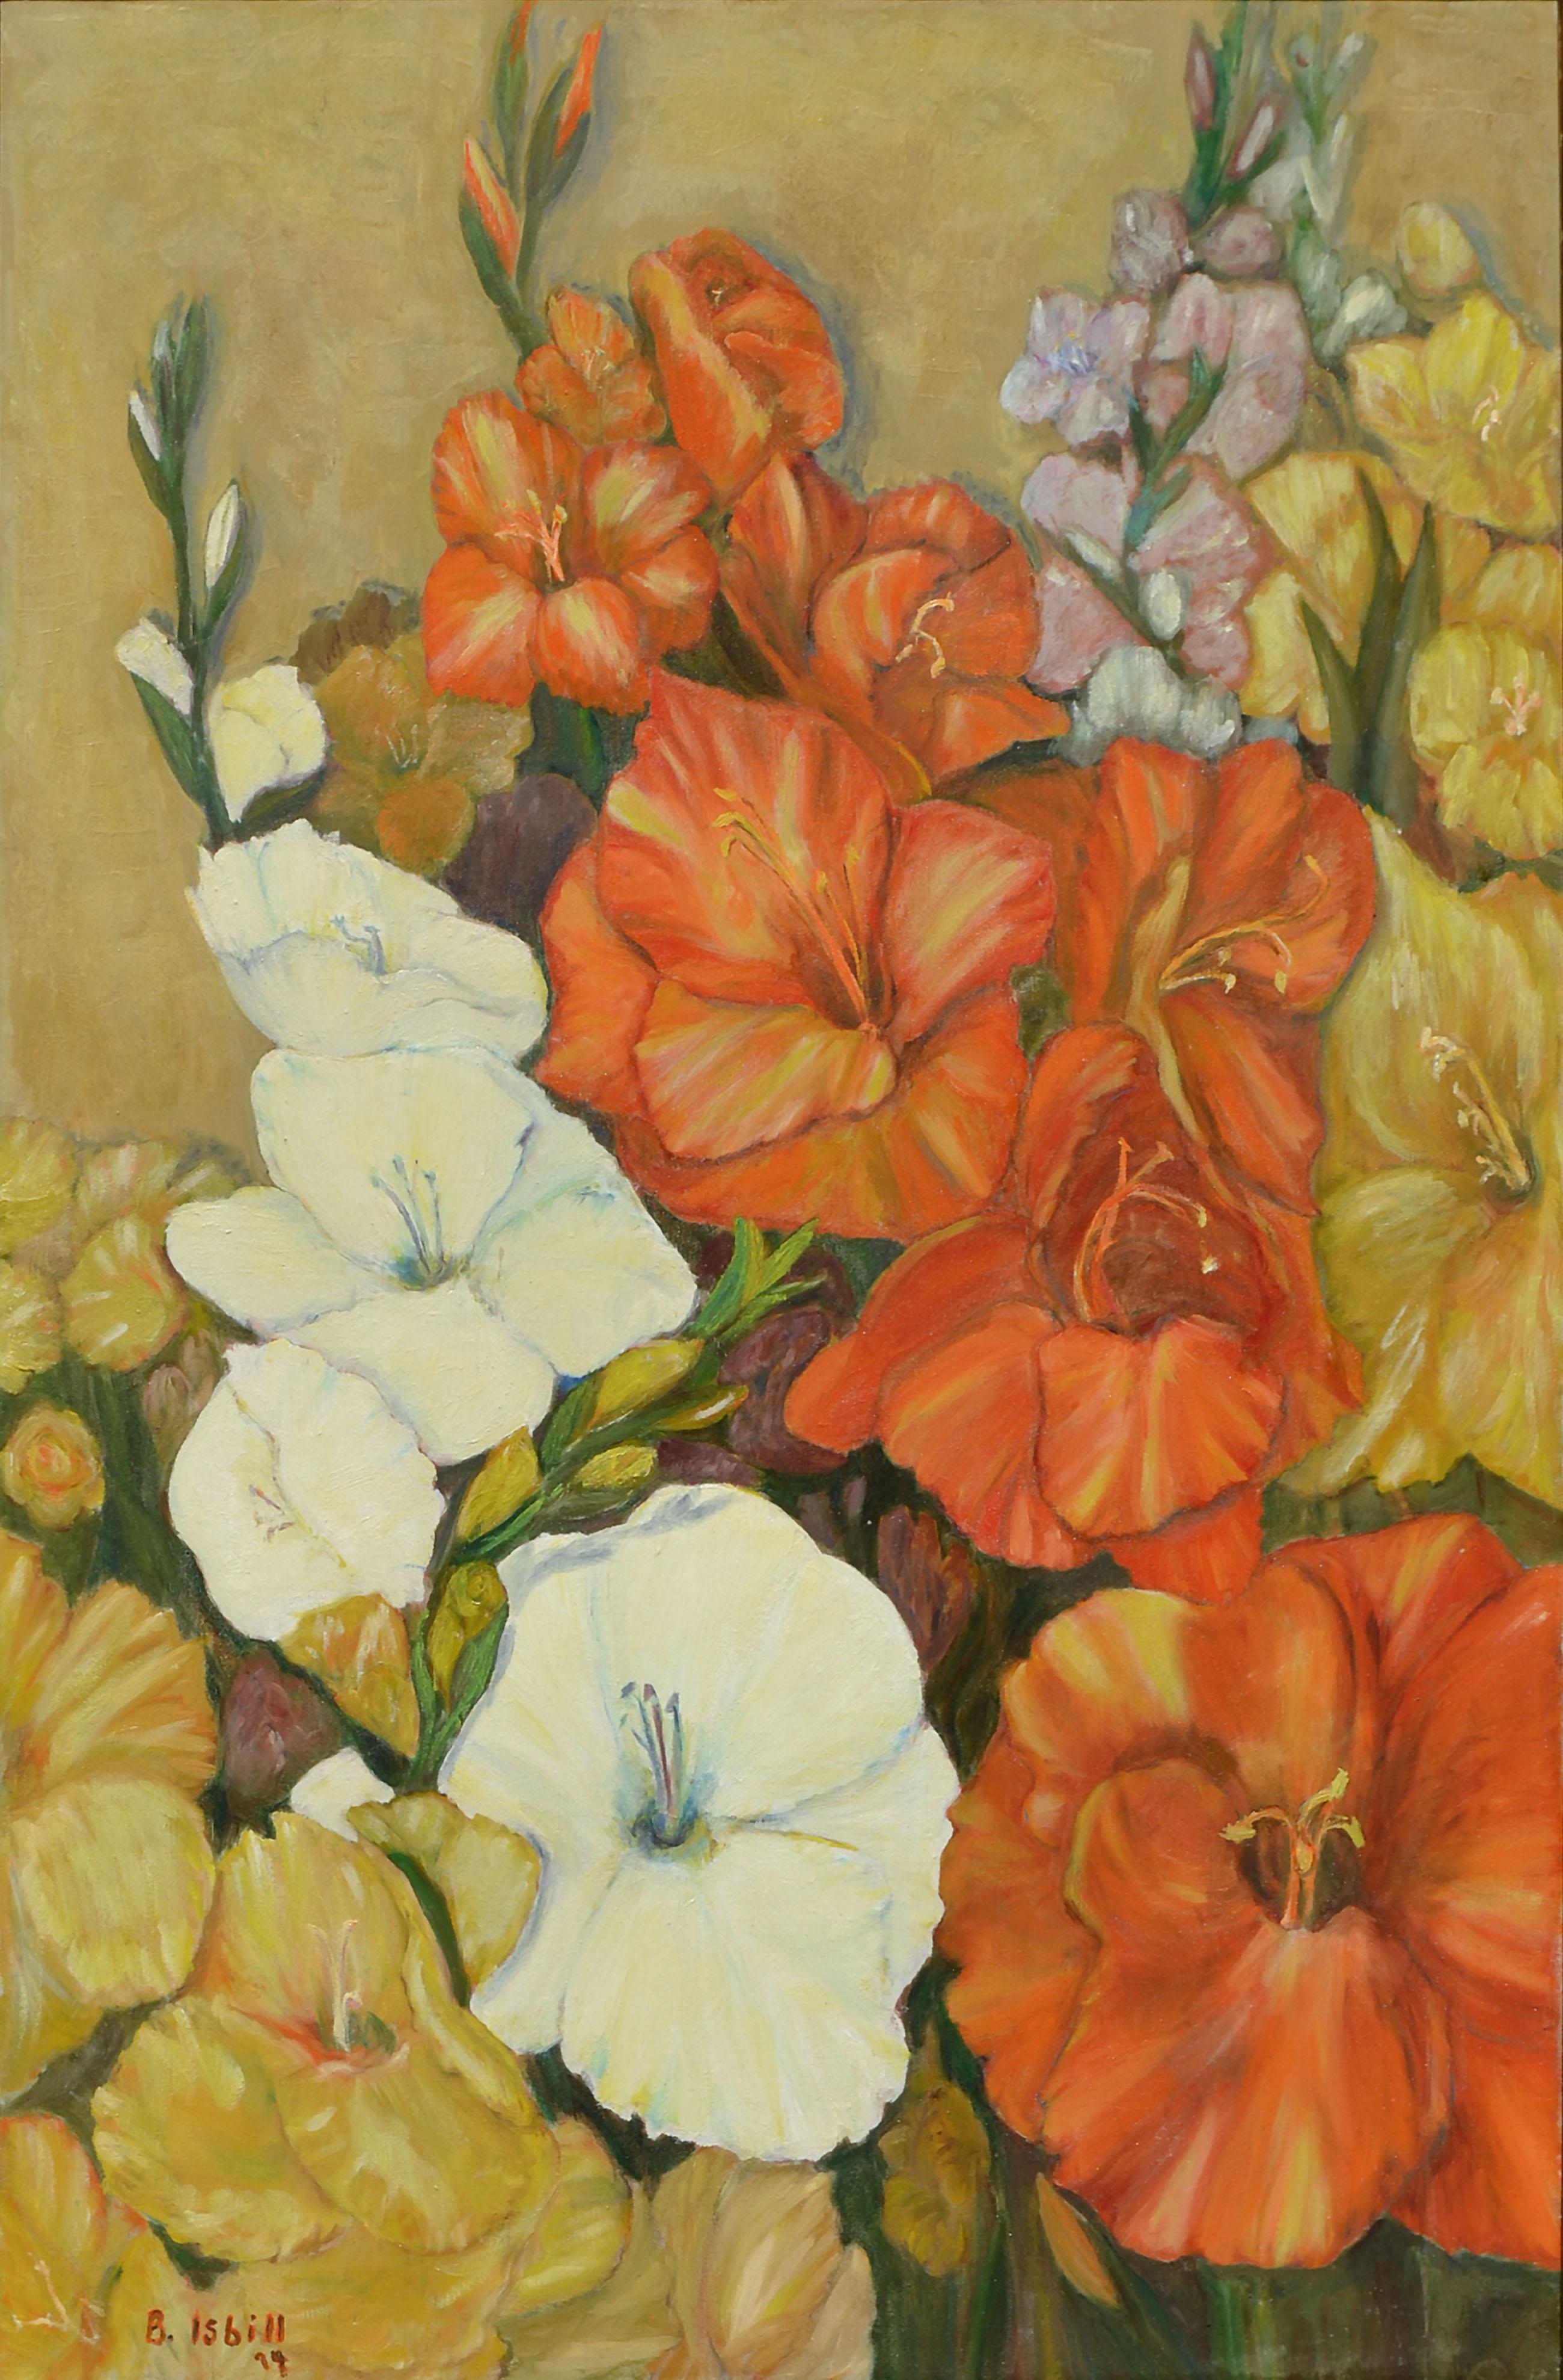 Gladiolas in Bloom - Nature morte florale des années 1970 - Painting de B Isbill